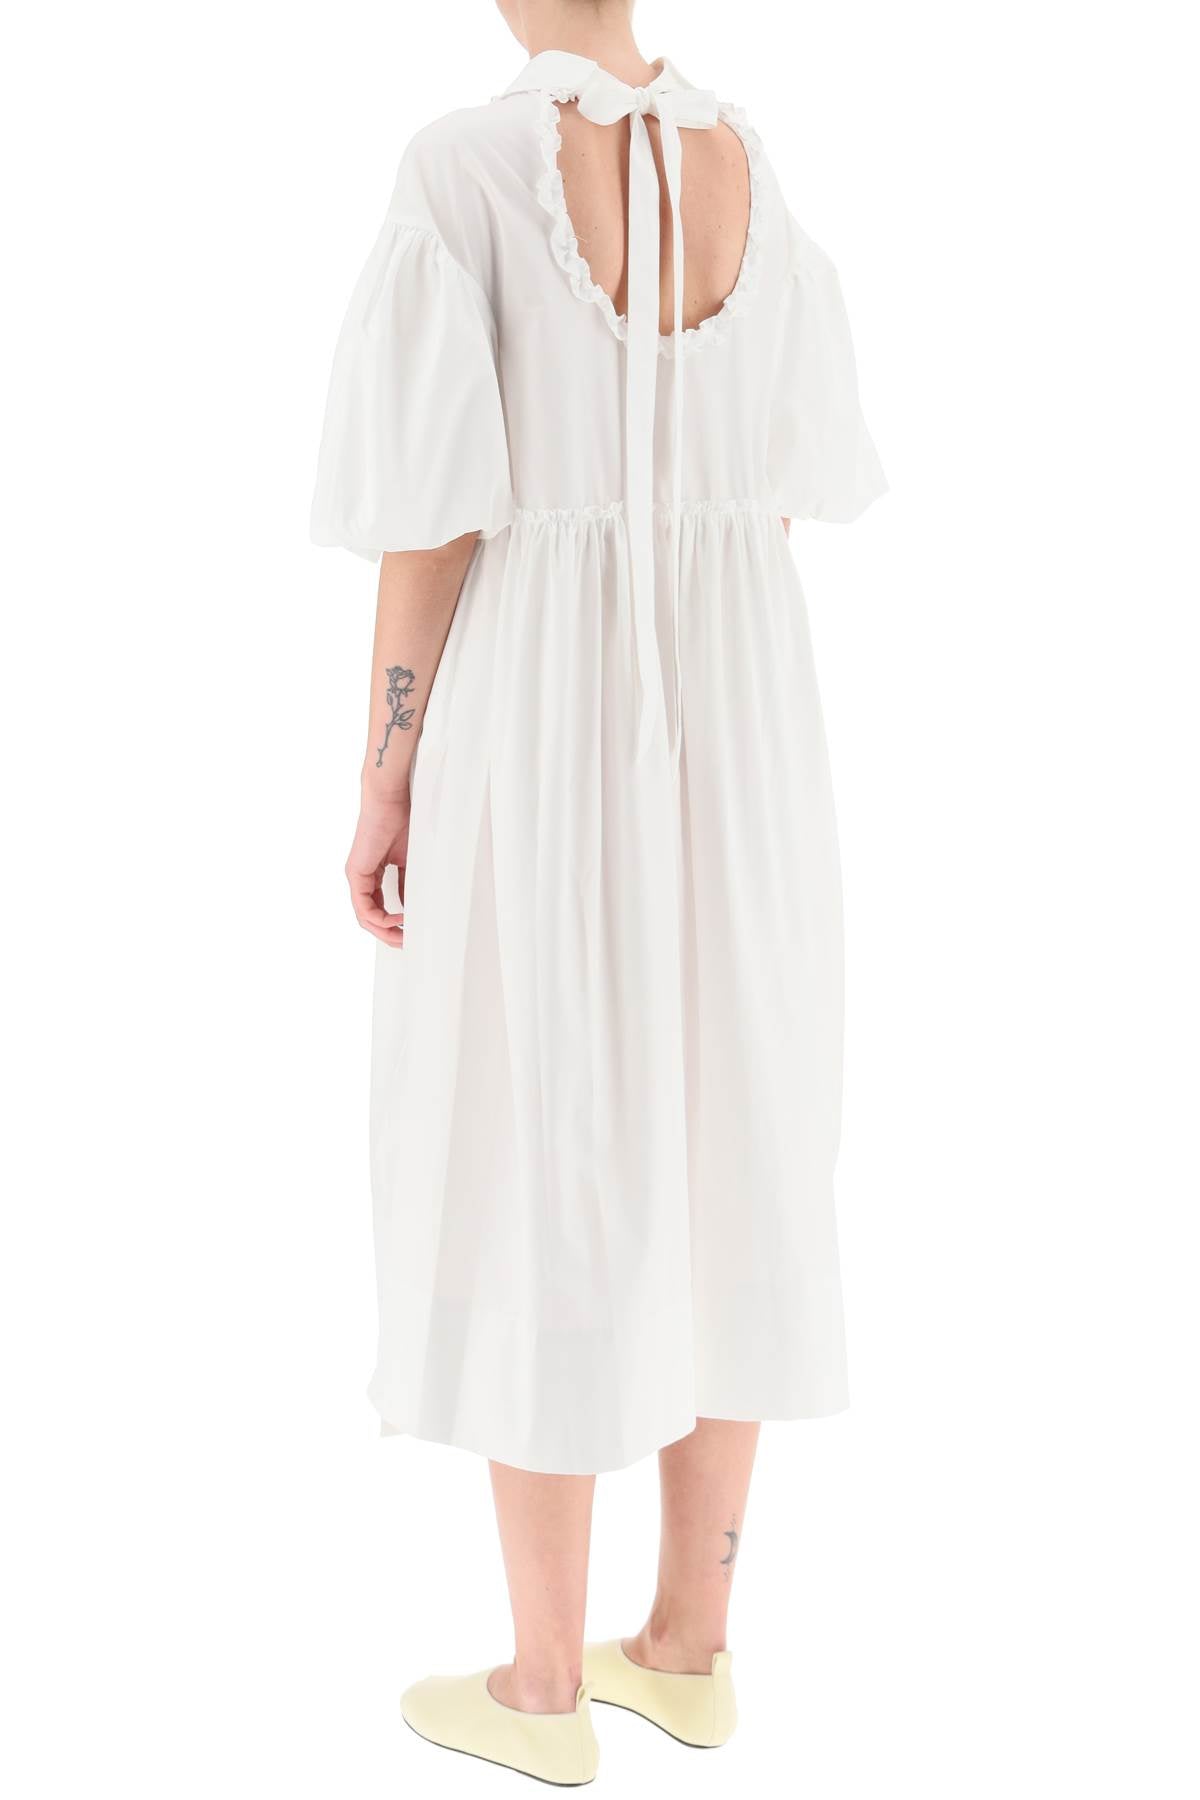 SIMONE ROCHA Women's White Cotton Poplin Midi Dress with Puff Sleeves and Bead Embellishments